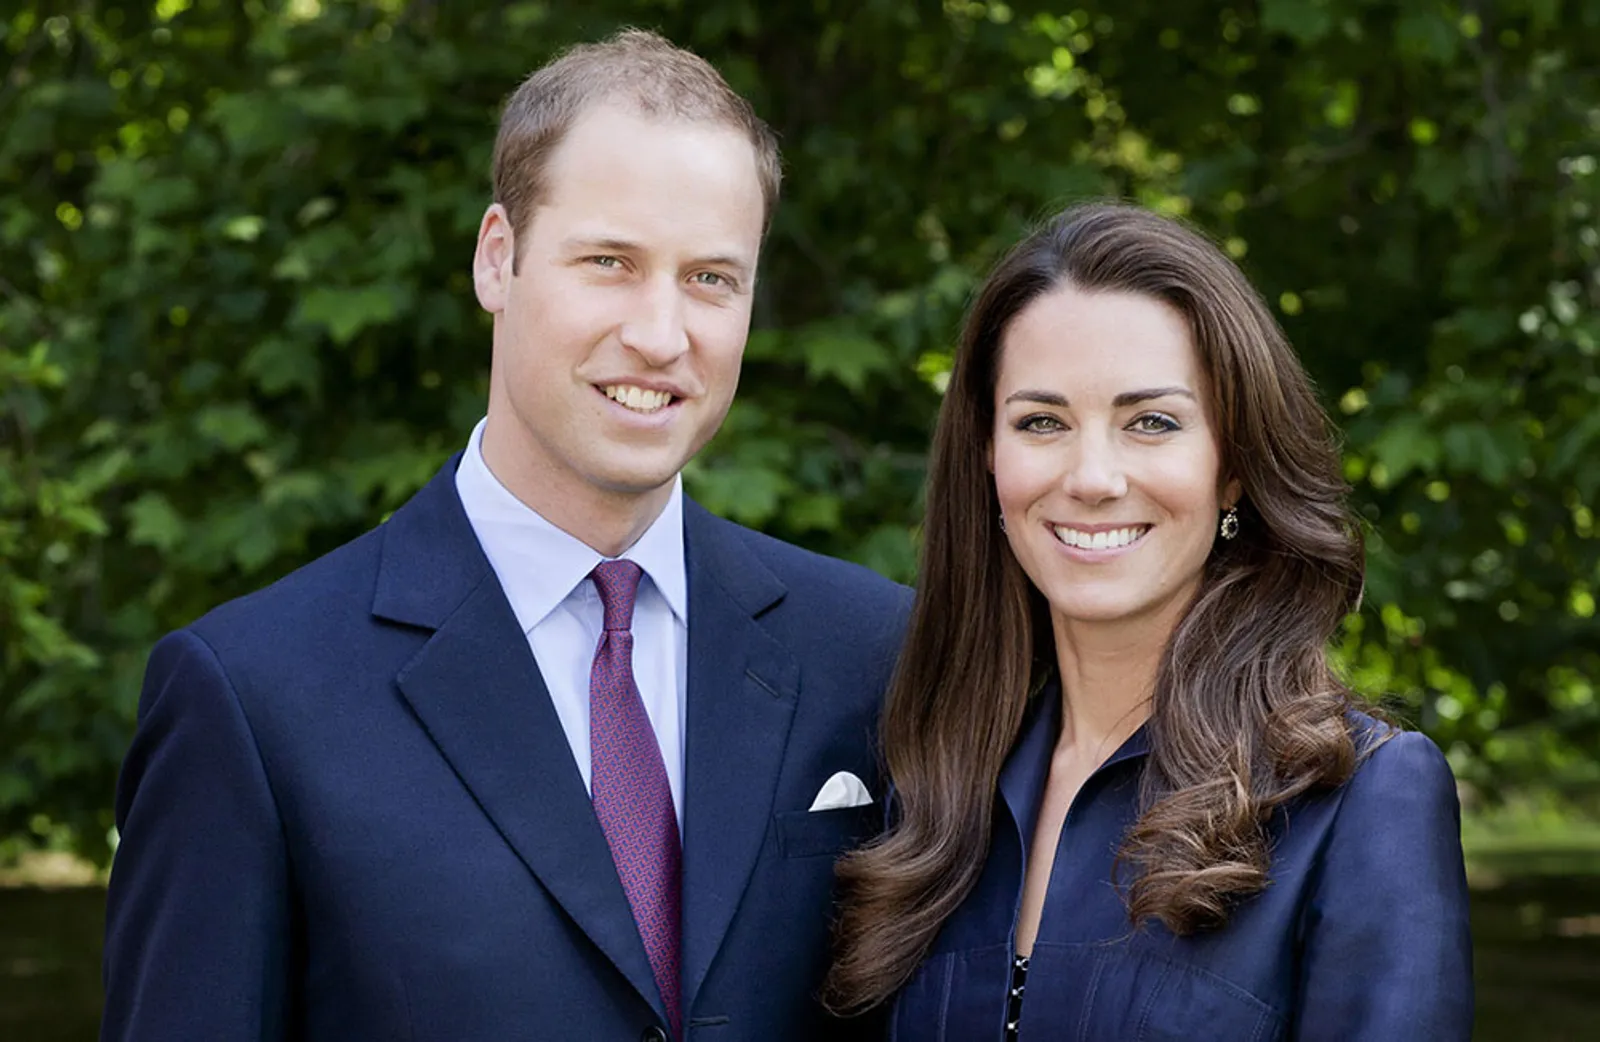 Alasan Pangeran William dan Kate Middleton Nggak Pernah Bergandengan